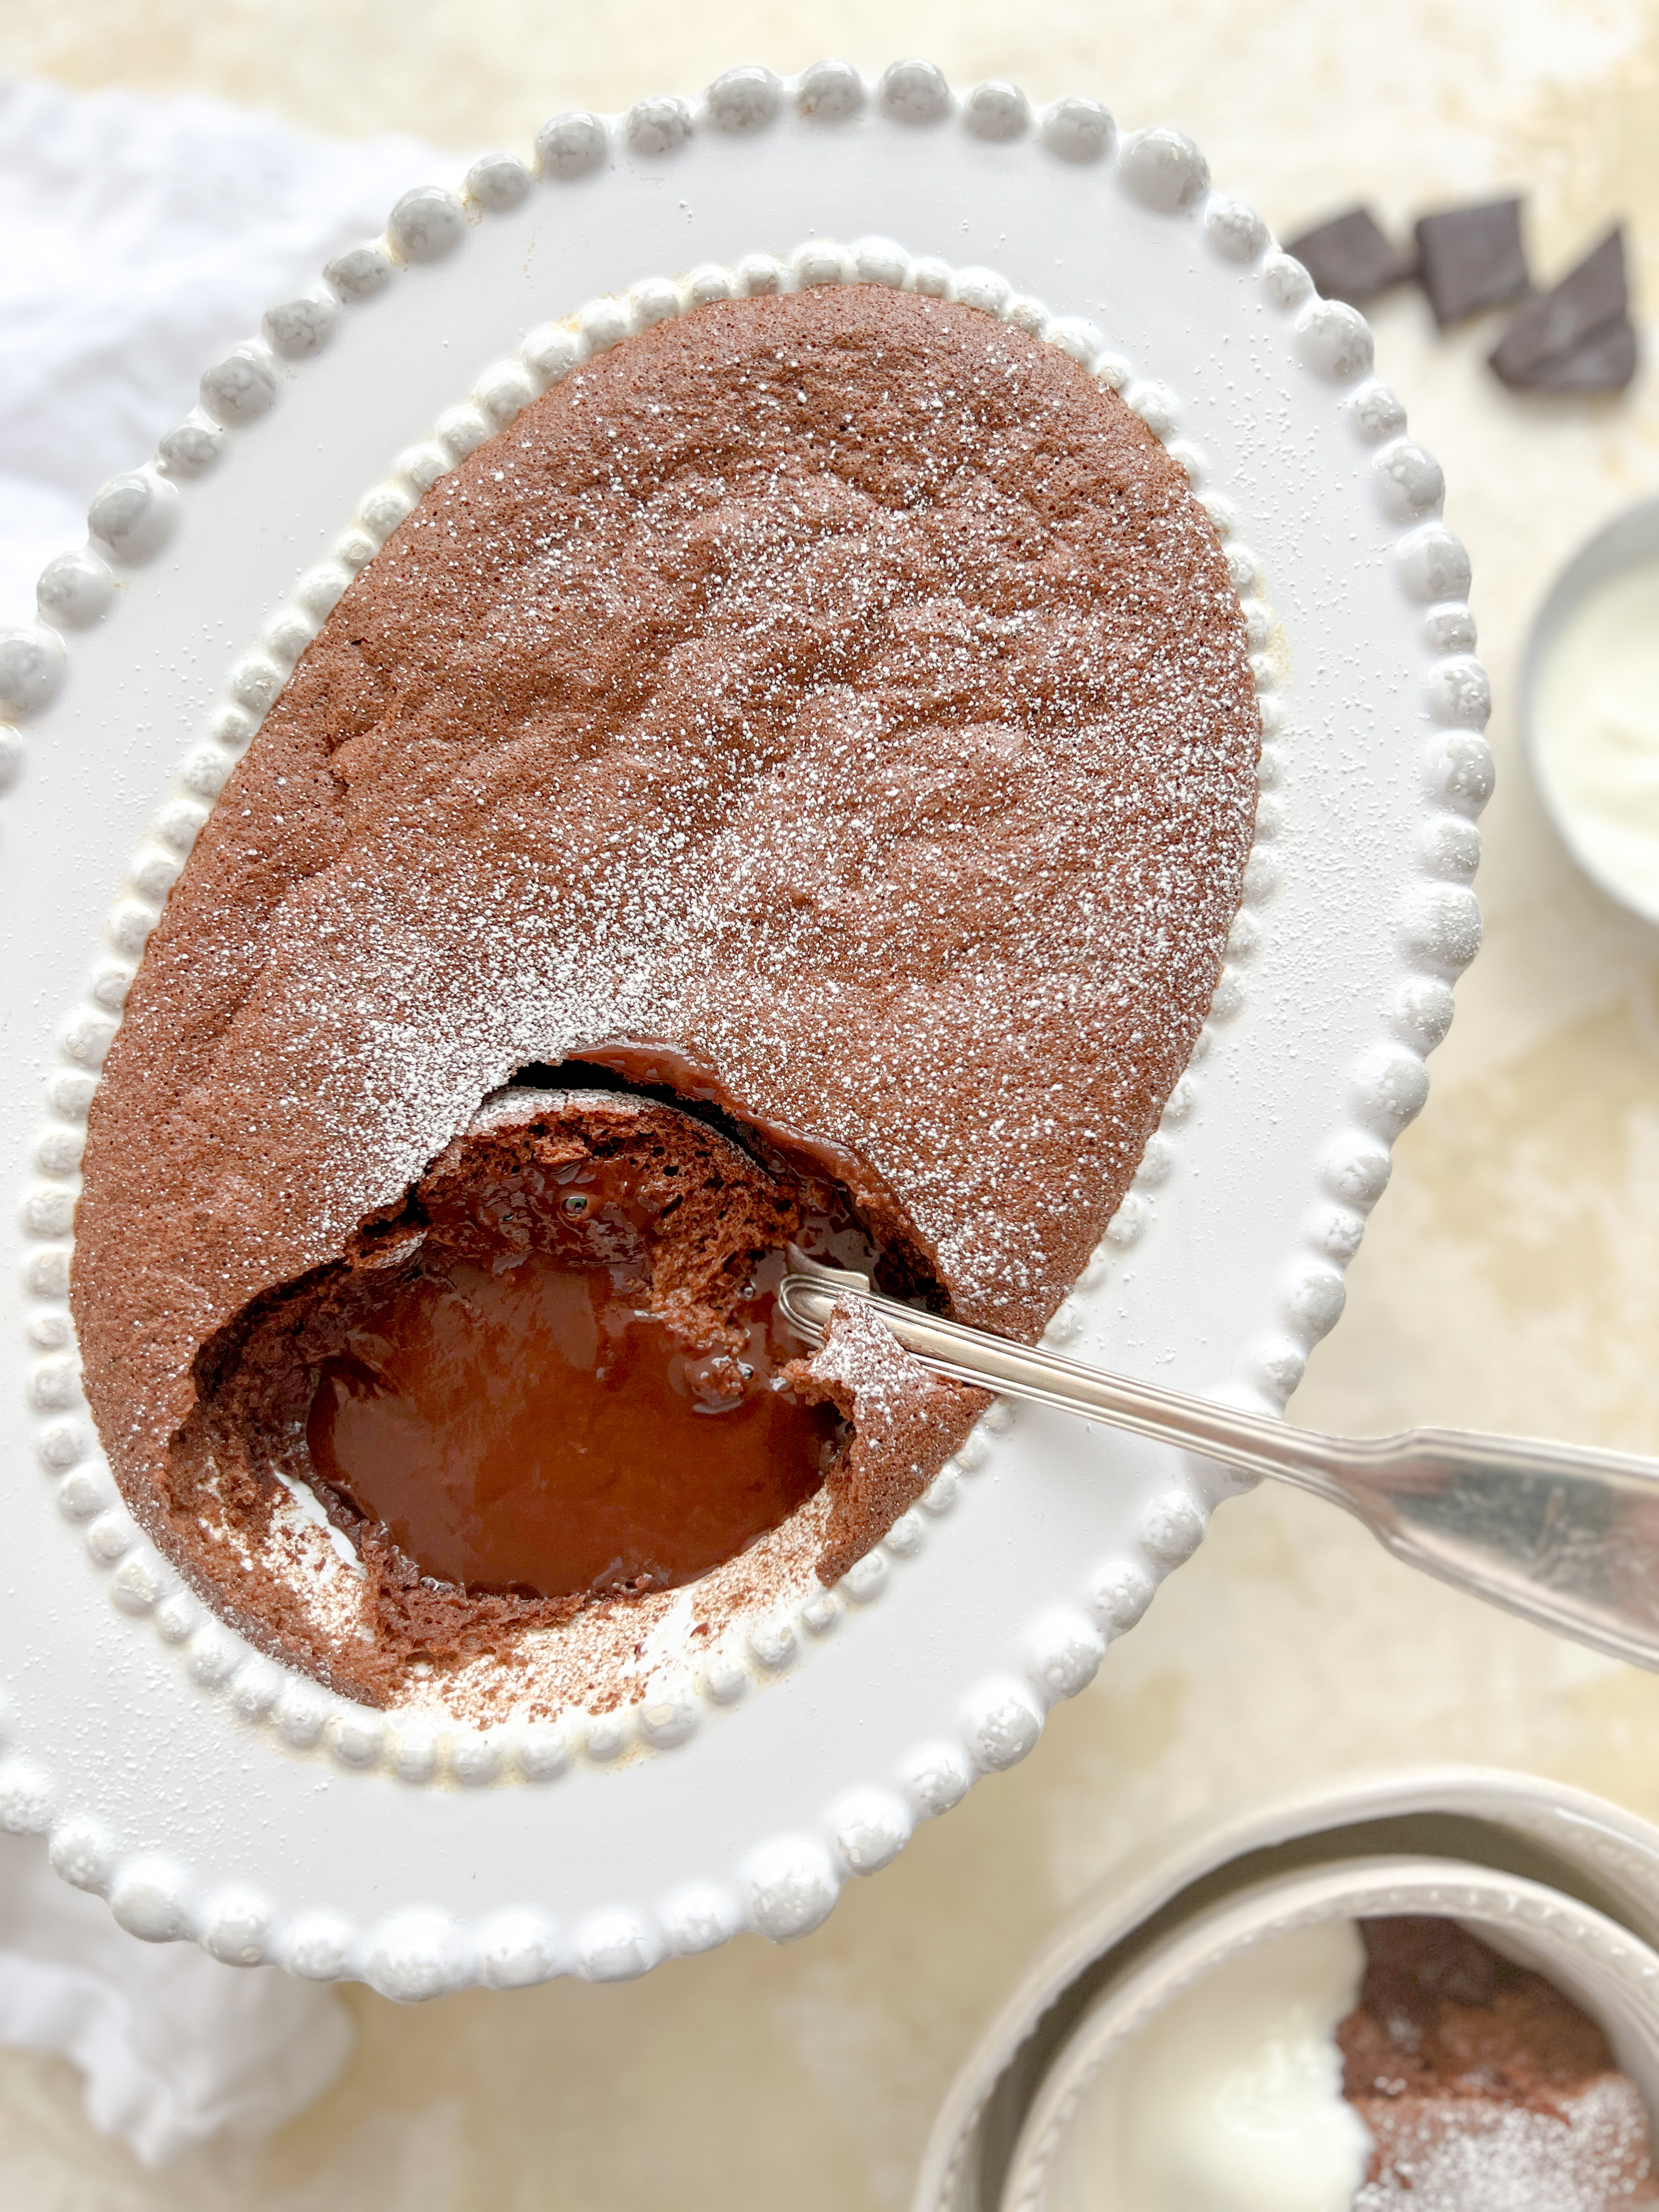 Photograph of Self-Saucing Chocolate Pudding